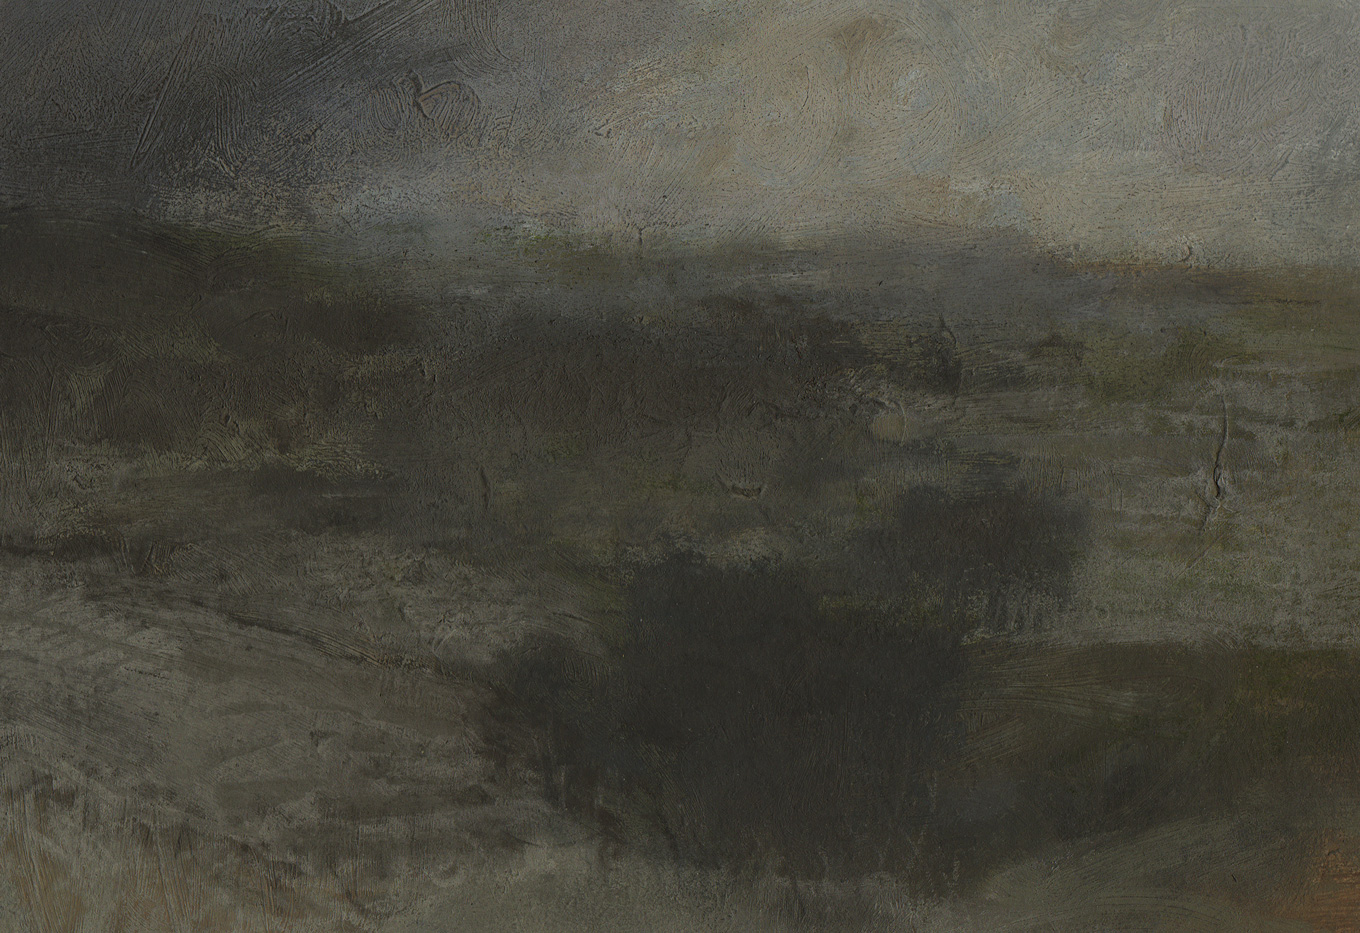 Nicholas Herbert, British Artist - Landscape L938, Sharpenhoe Series, Looking Past the Sundon Hills Escarpment, The Chiltern Hills, contemporary mixed media painting